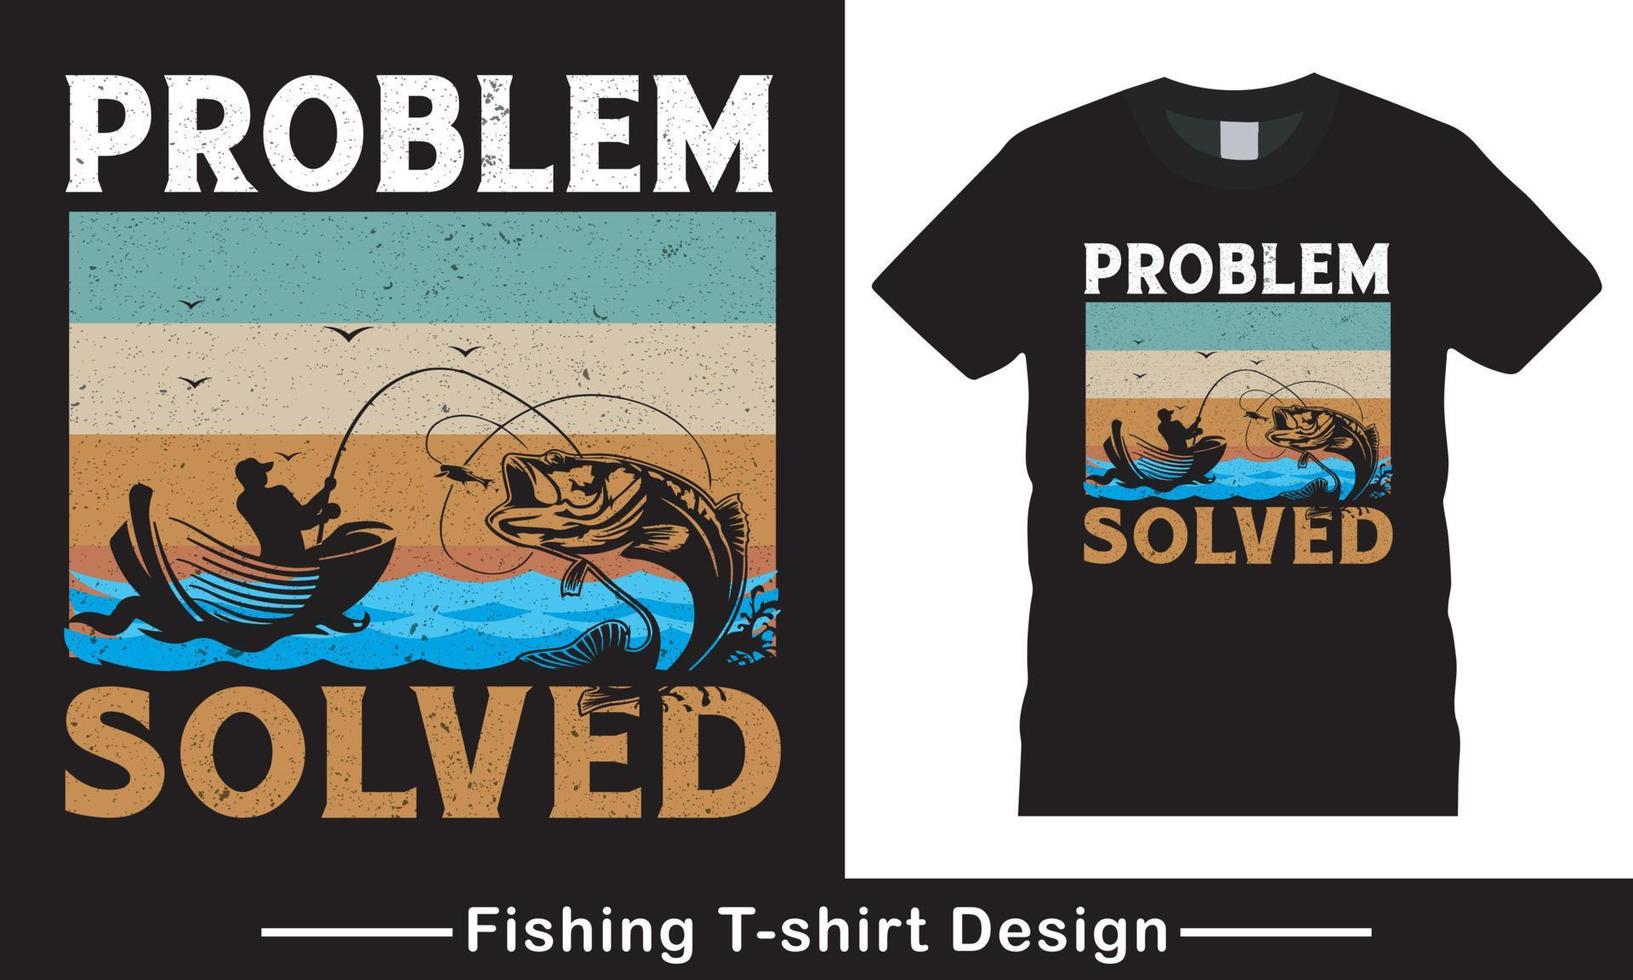 fiske Citat tyfografi vektor t-shirt design mall proffs vektor